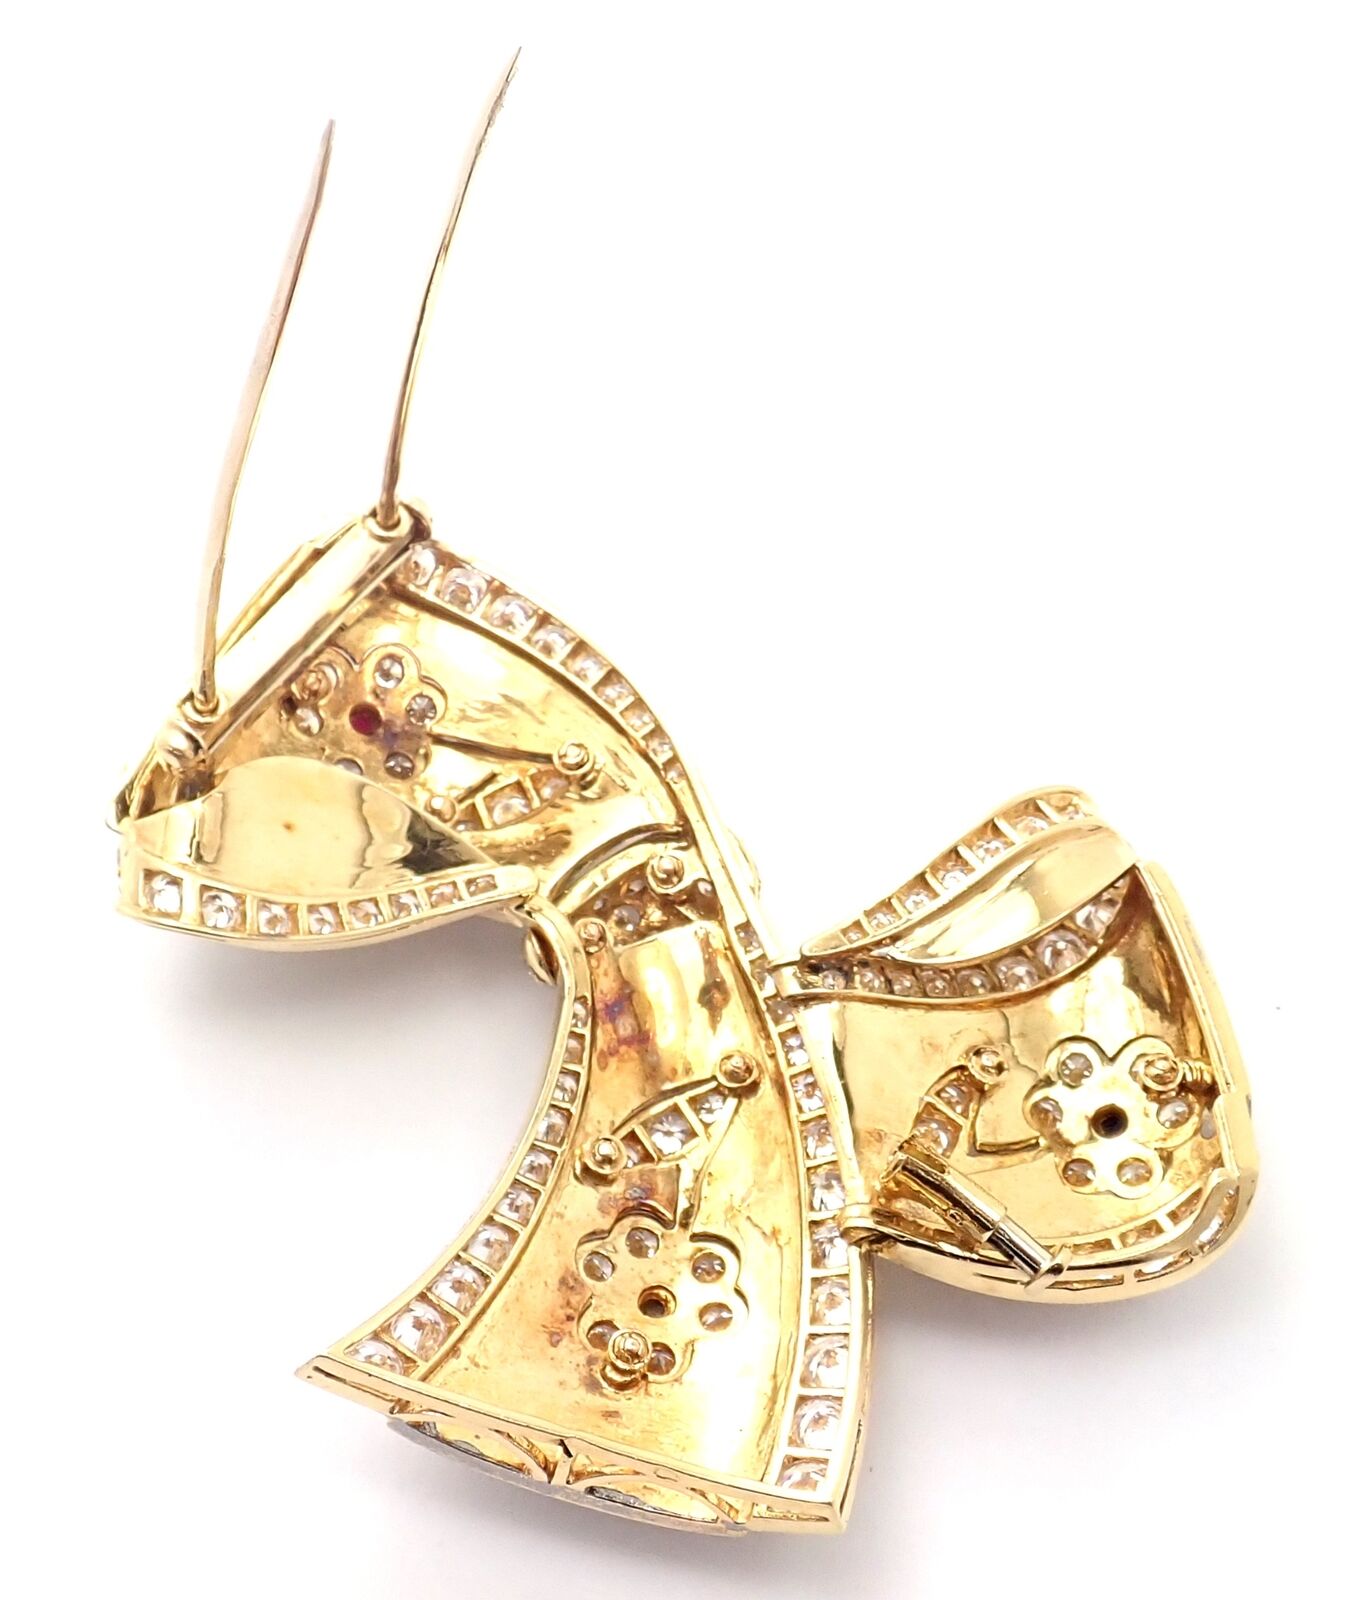 Rare! Authentic Van Cleef & Arpels Diamond 18K Yellow Gold Flower Pin Brooch